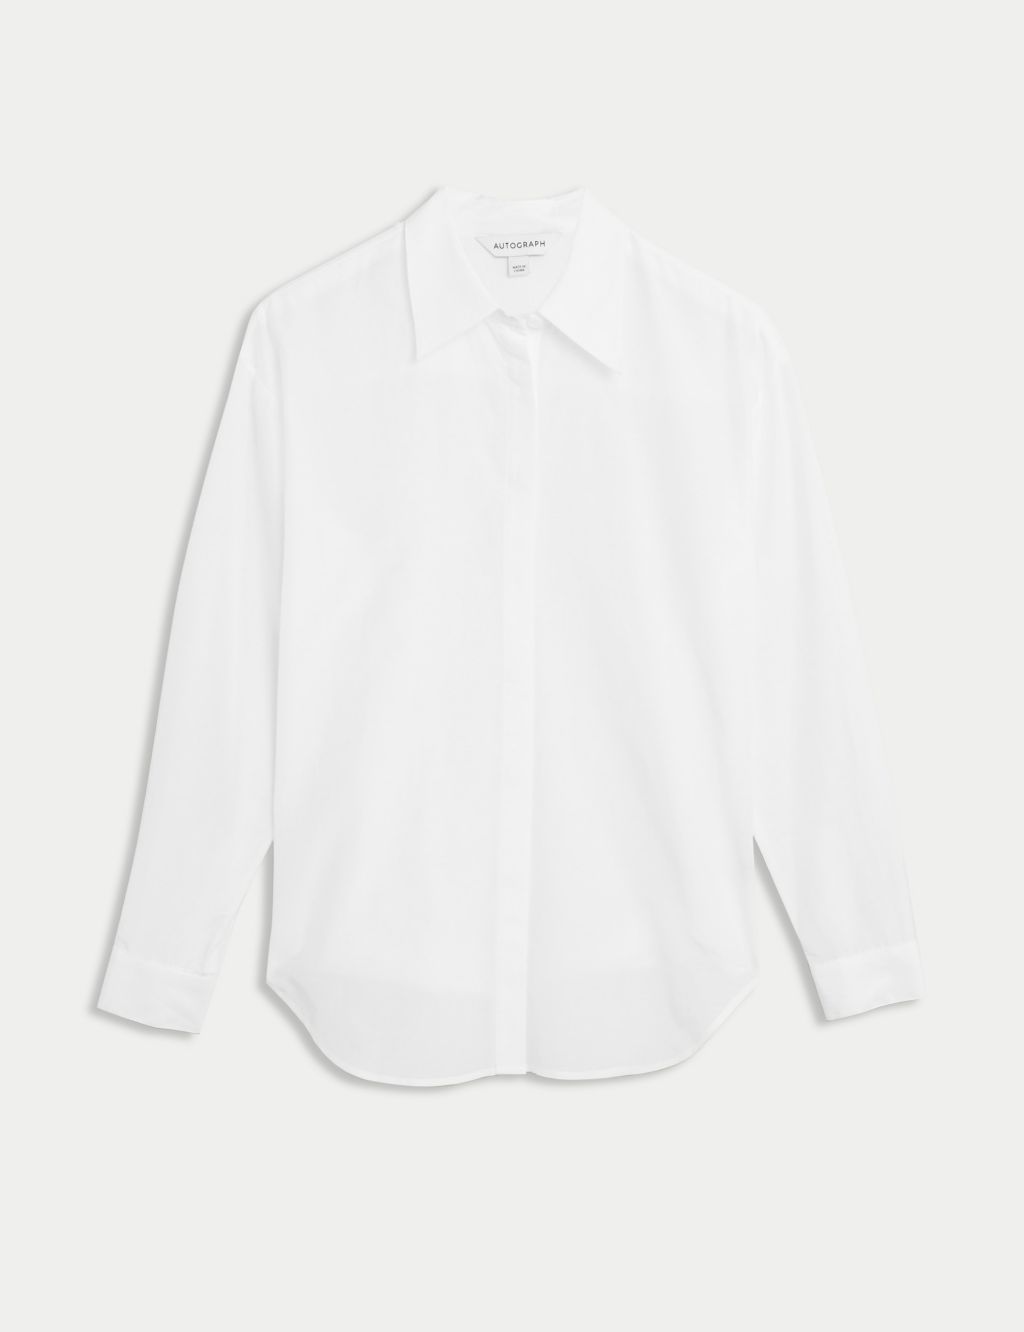 Silk Blend Collared Long Sleeve Shirt image 1